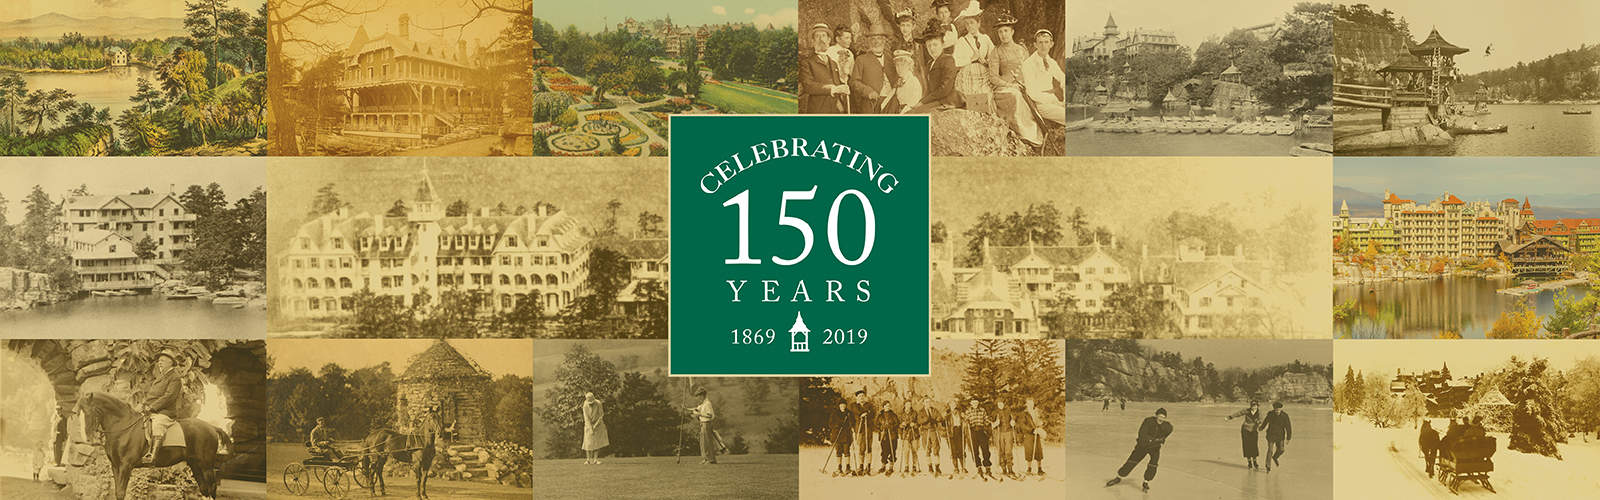 Celebrating 150 Anniversary collage